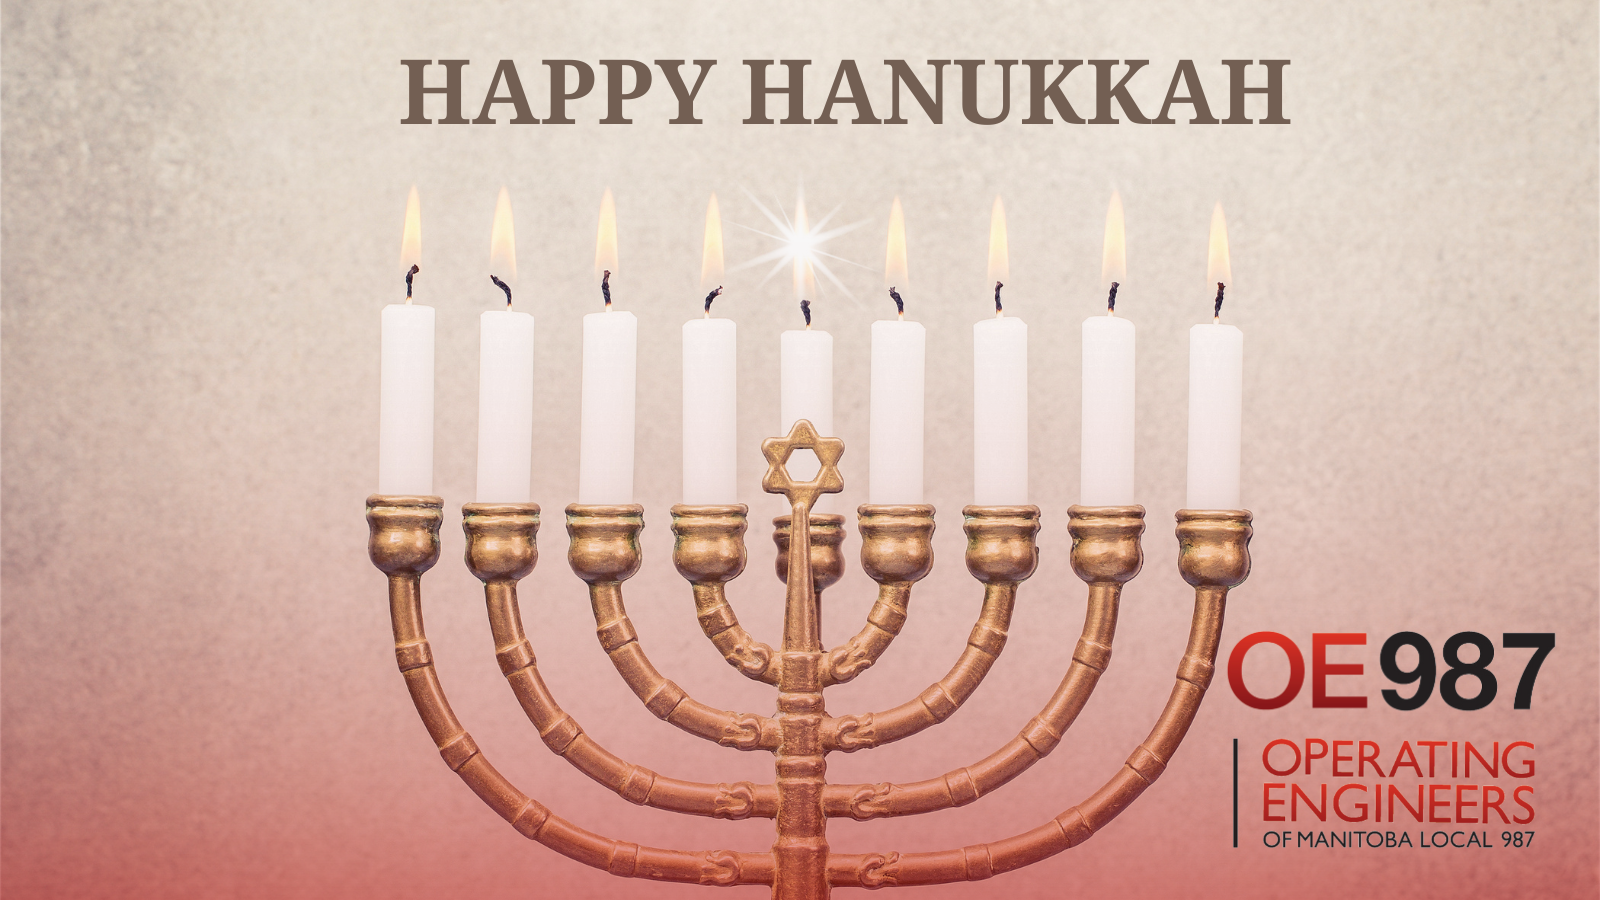 Image for Happy Hanukkah!